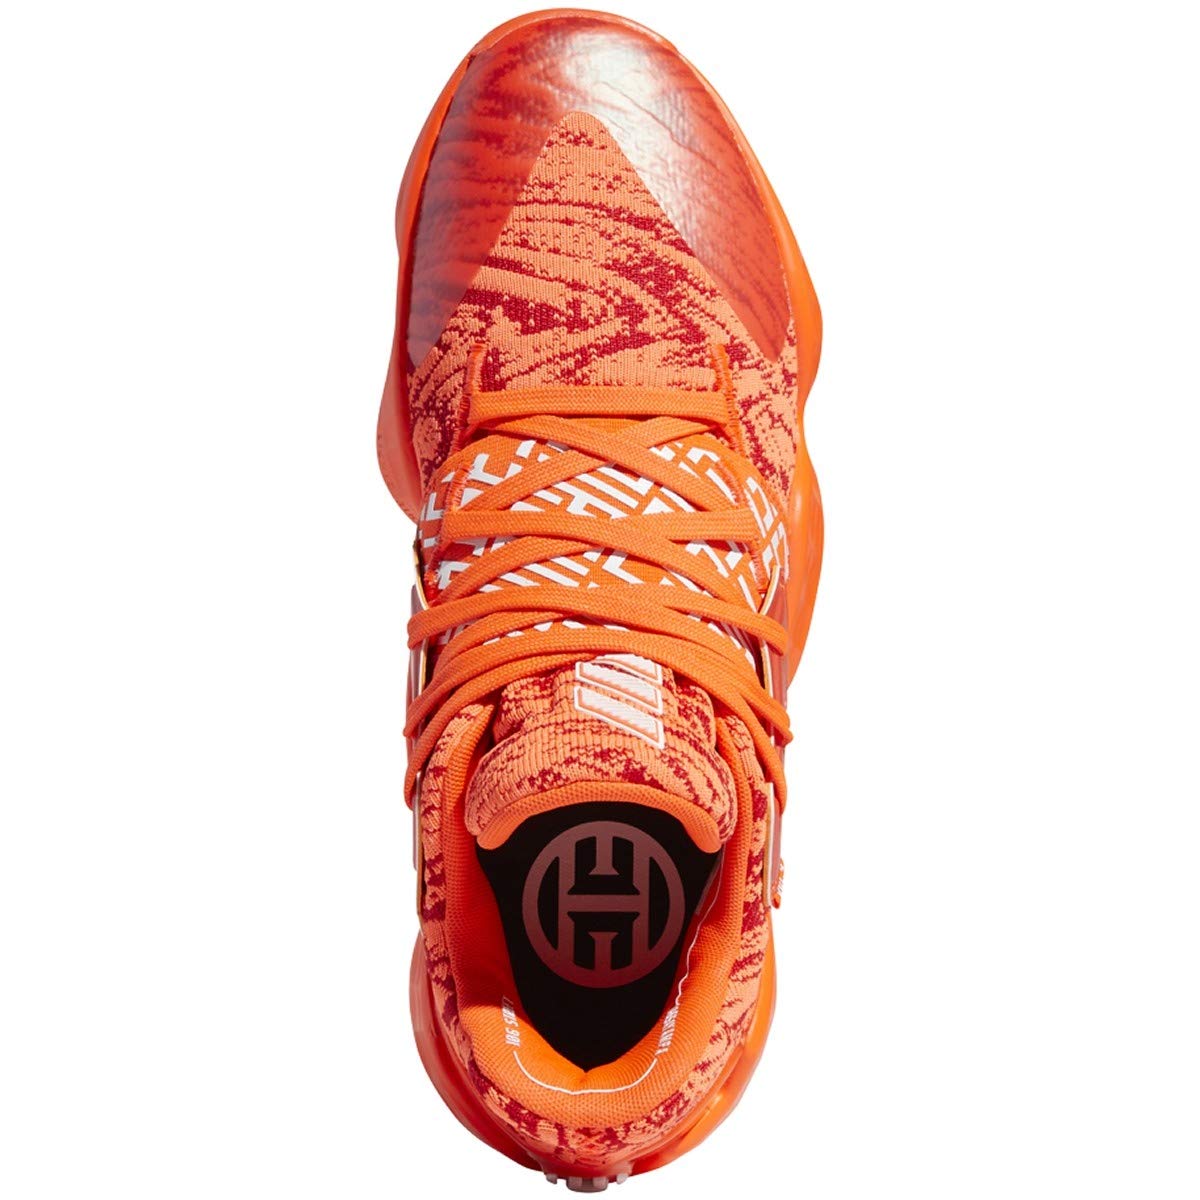 adidas Harden Vol. 4 Shoe - Men's Basketball Scarlet/White/Solar Orange